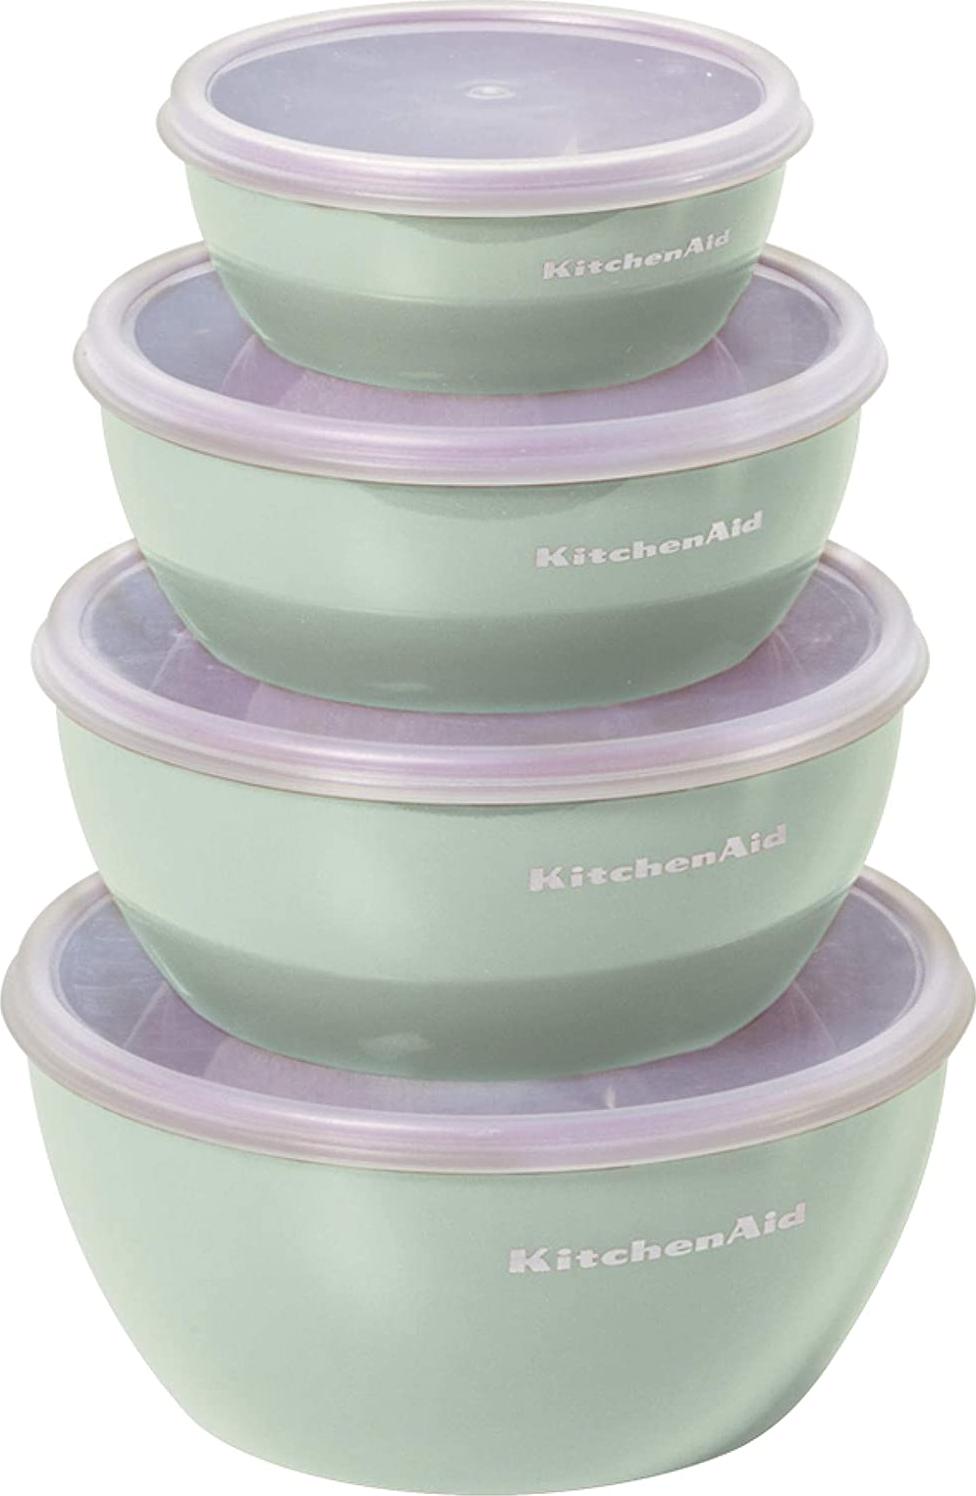 KitchenAid, KitchenAid Prep Bowls with Lids, Set of 4, Pistachio